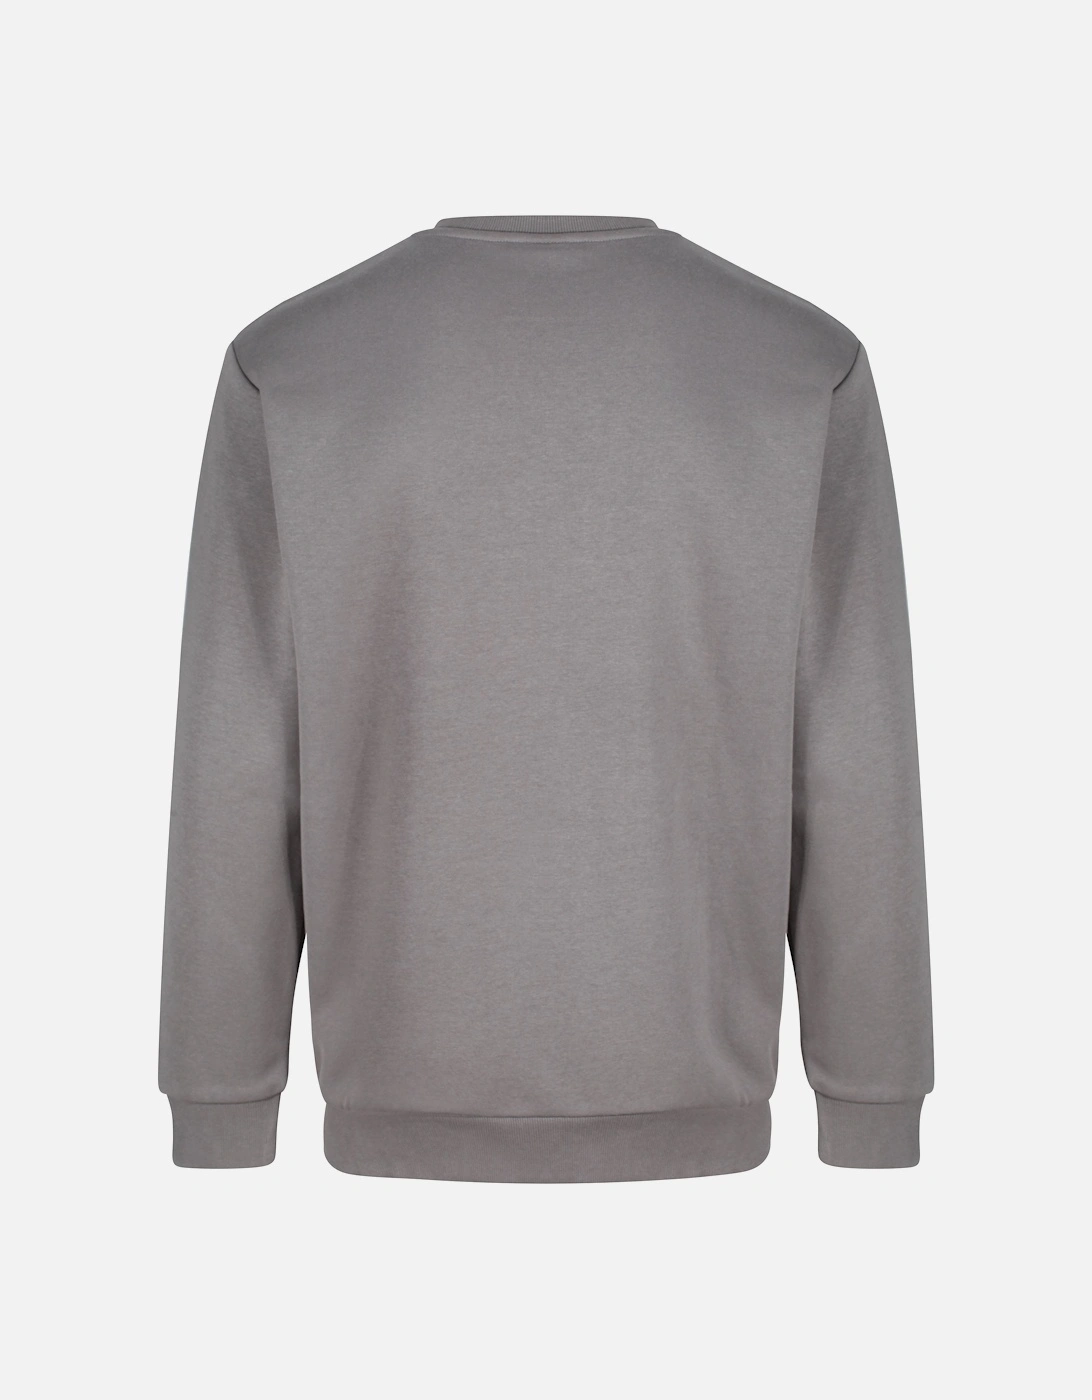 Manto Crew Neck Sweatshirt | Dark Grey